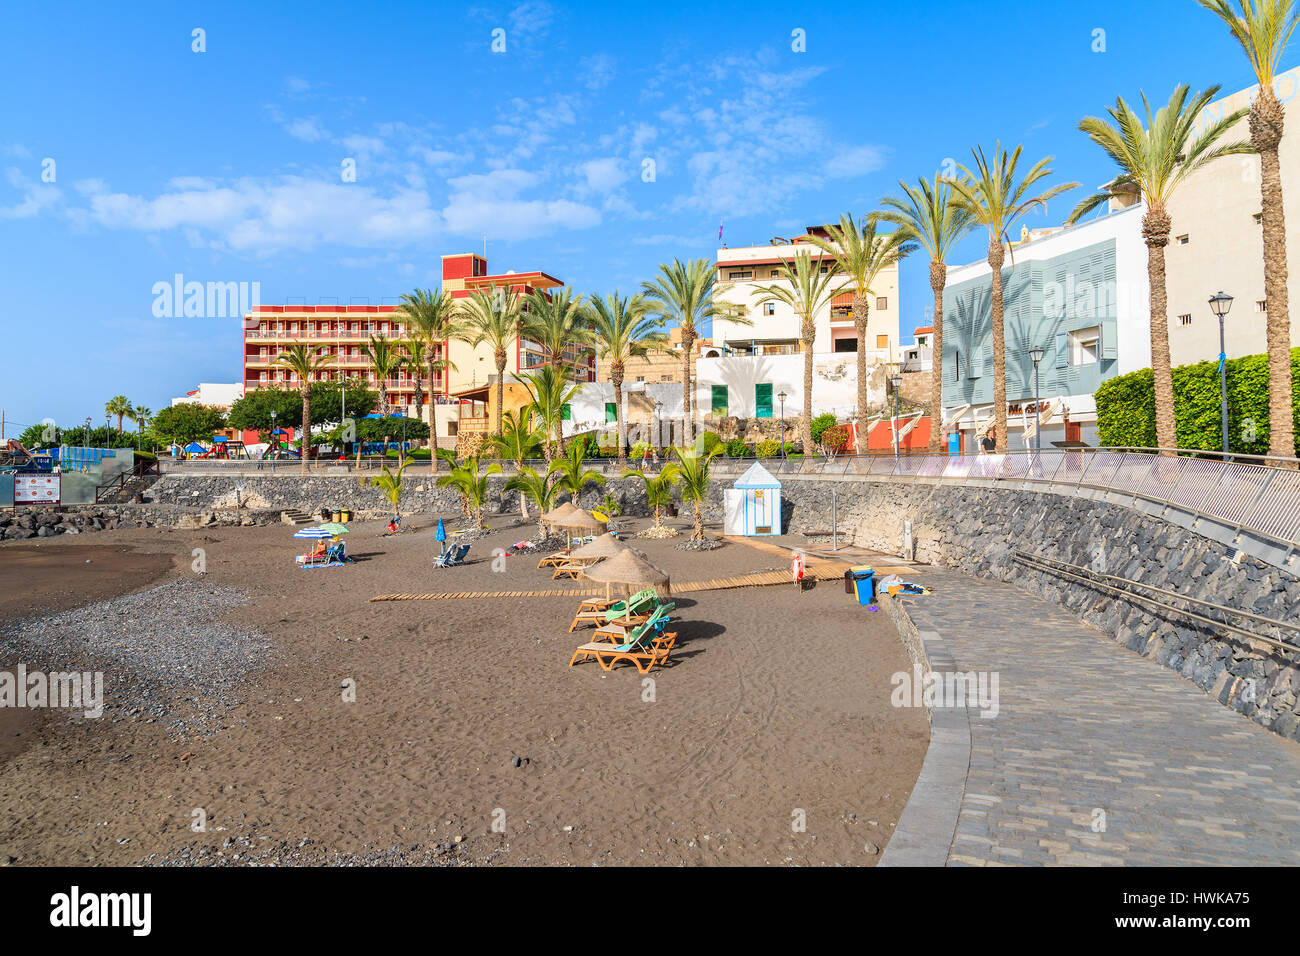 SAN JUAN BEACH, TENERIFE ISLAND - NOV 15, 2015: colorful buildings on a beach in San Juan town on Tenerife island, Spain. Stock Photo